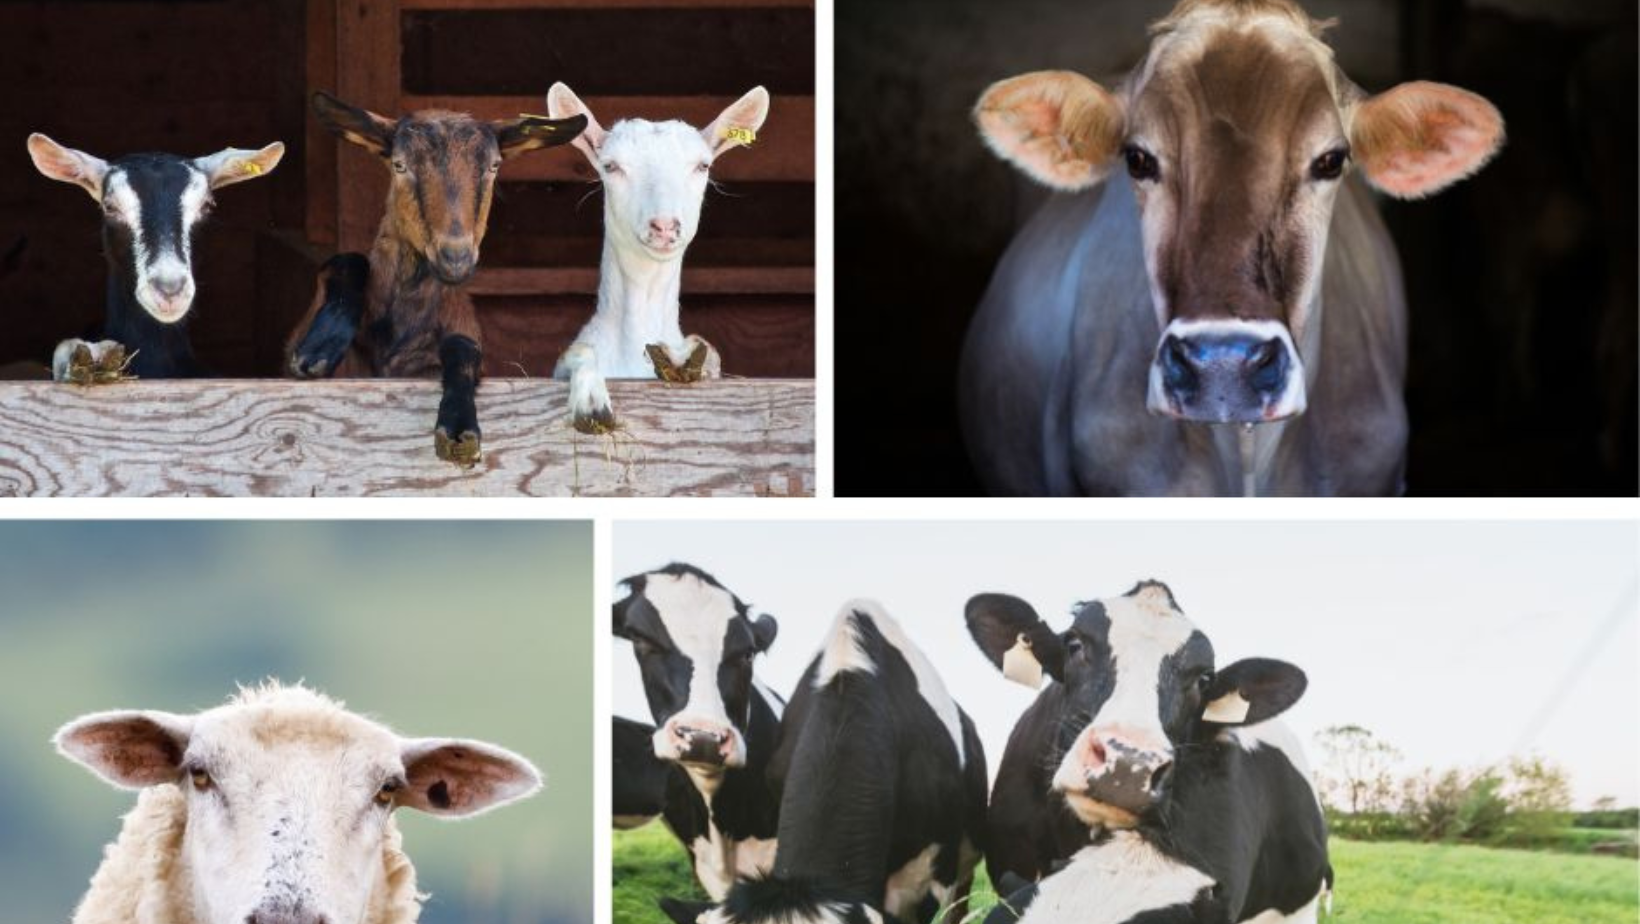 Dairy Farm Innovation & Alternative Management Grant